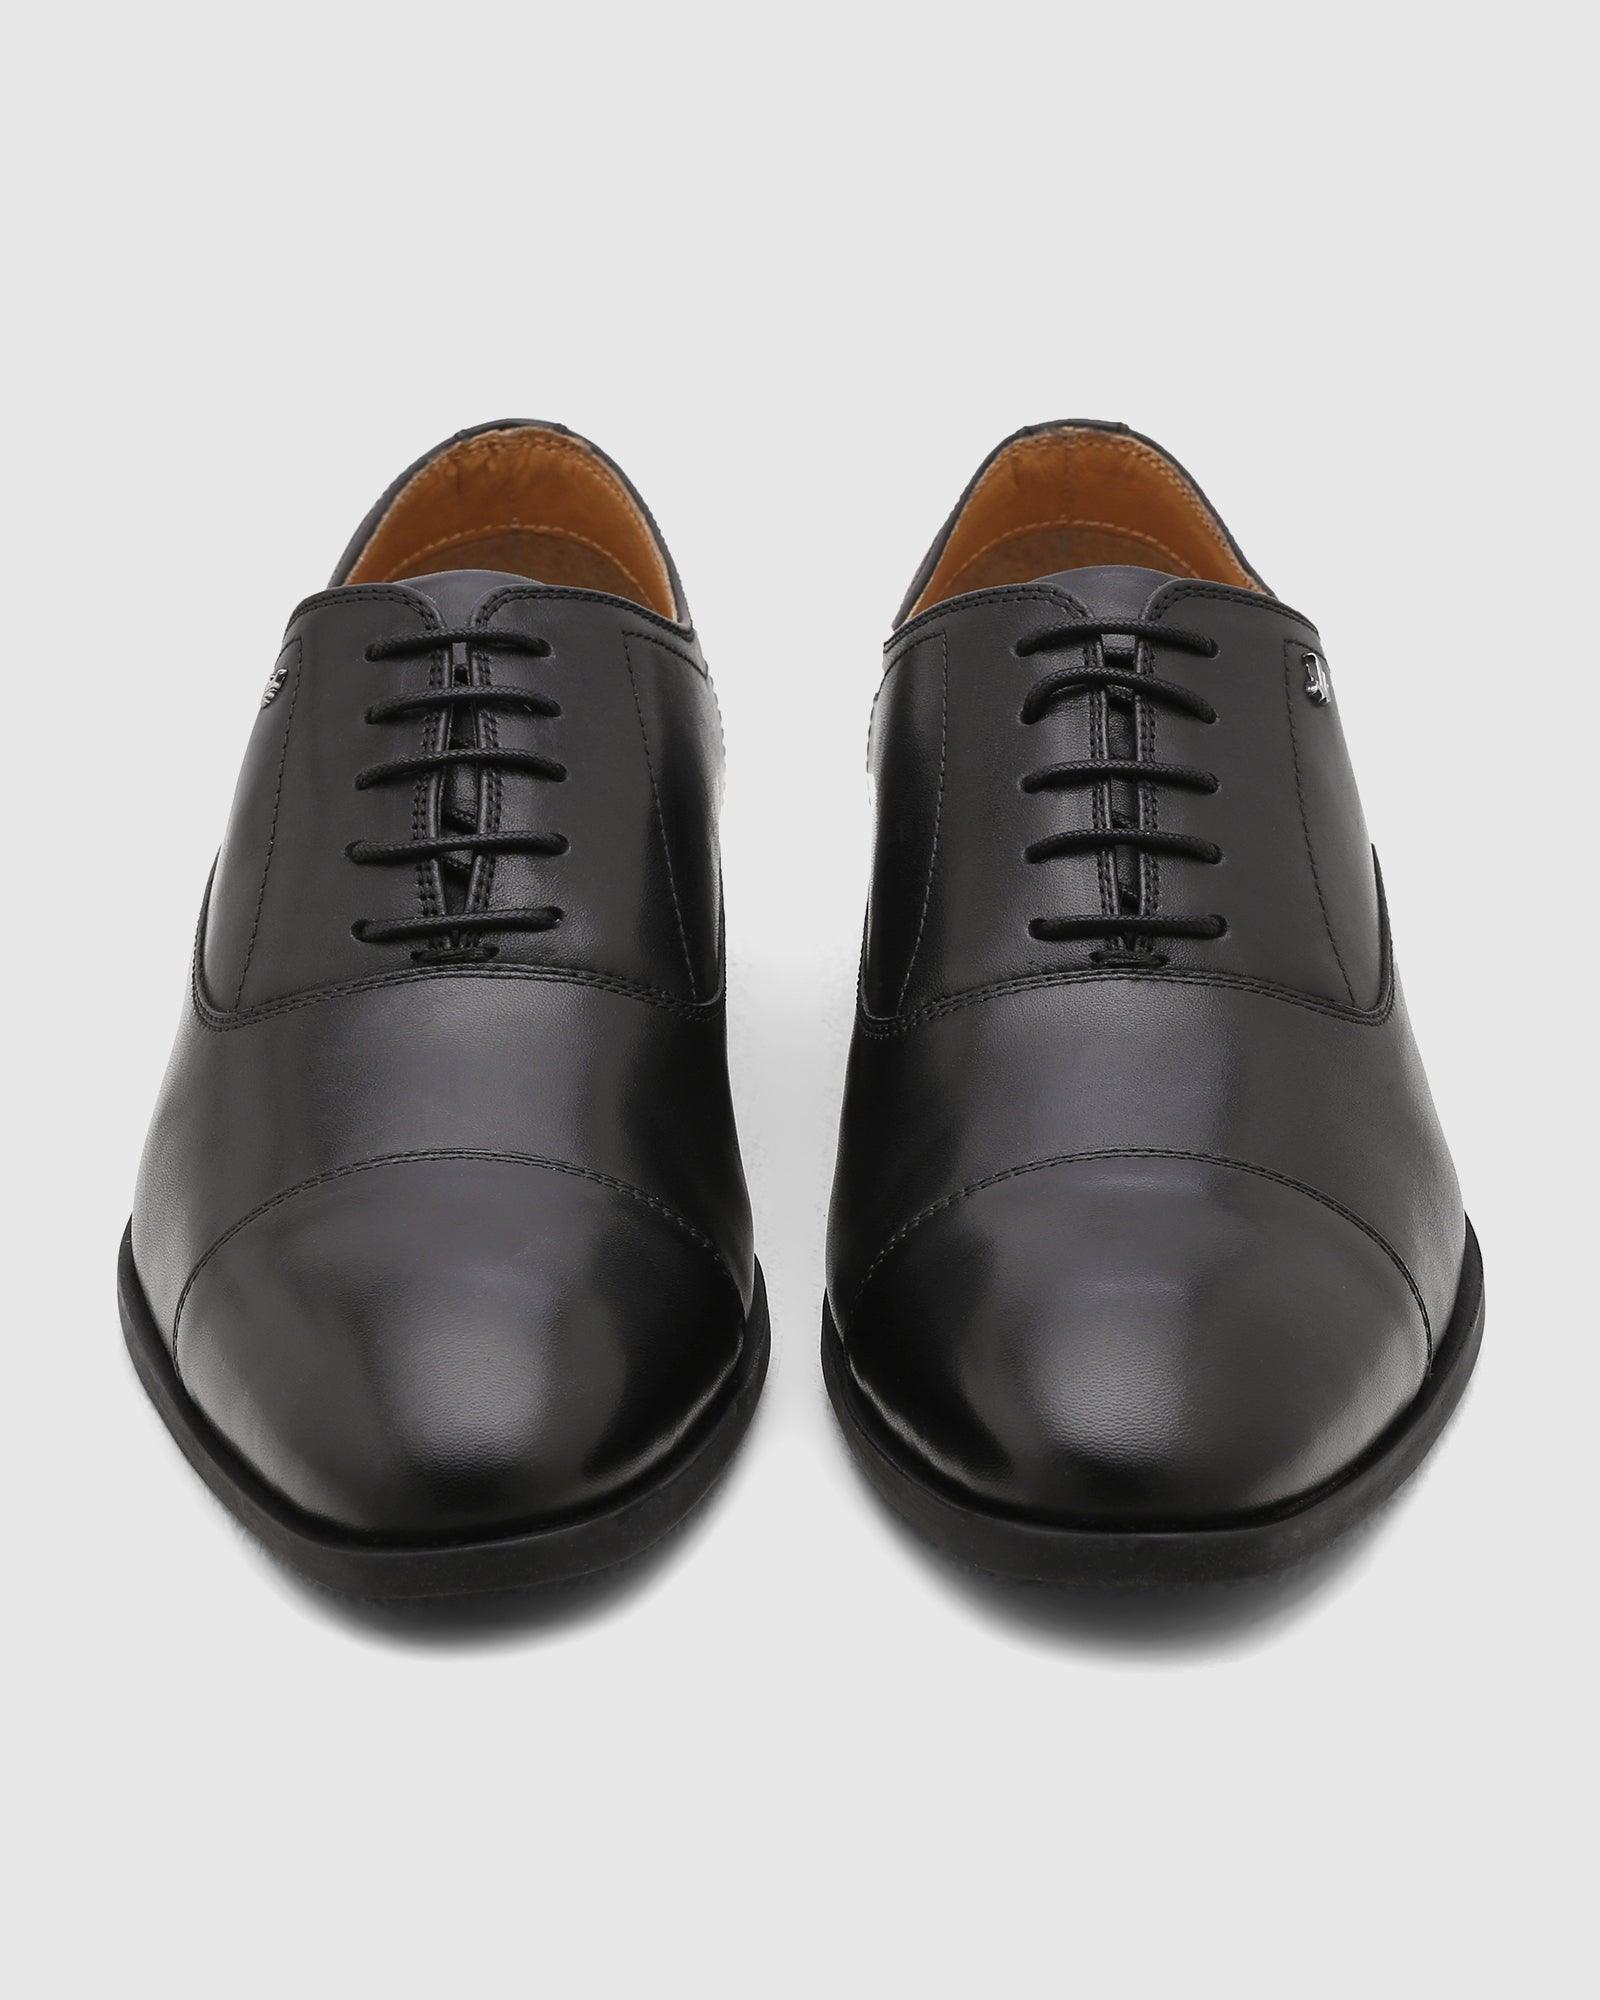 Leather Black Solid Oxford Shoes - Qoila